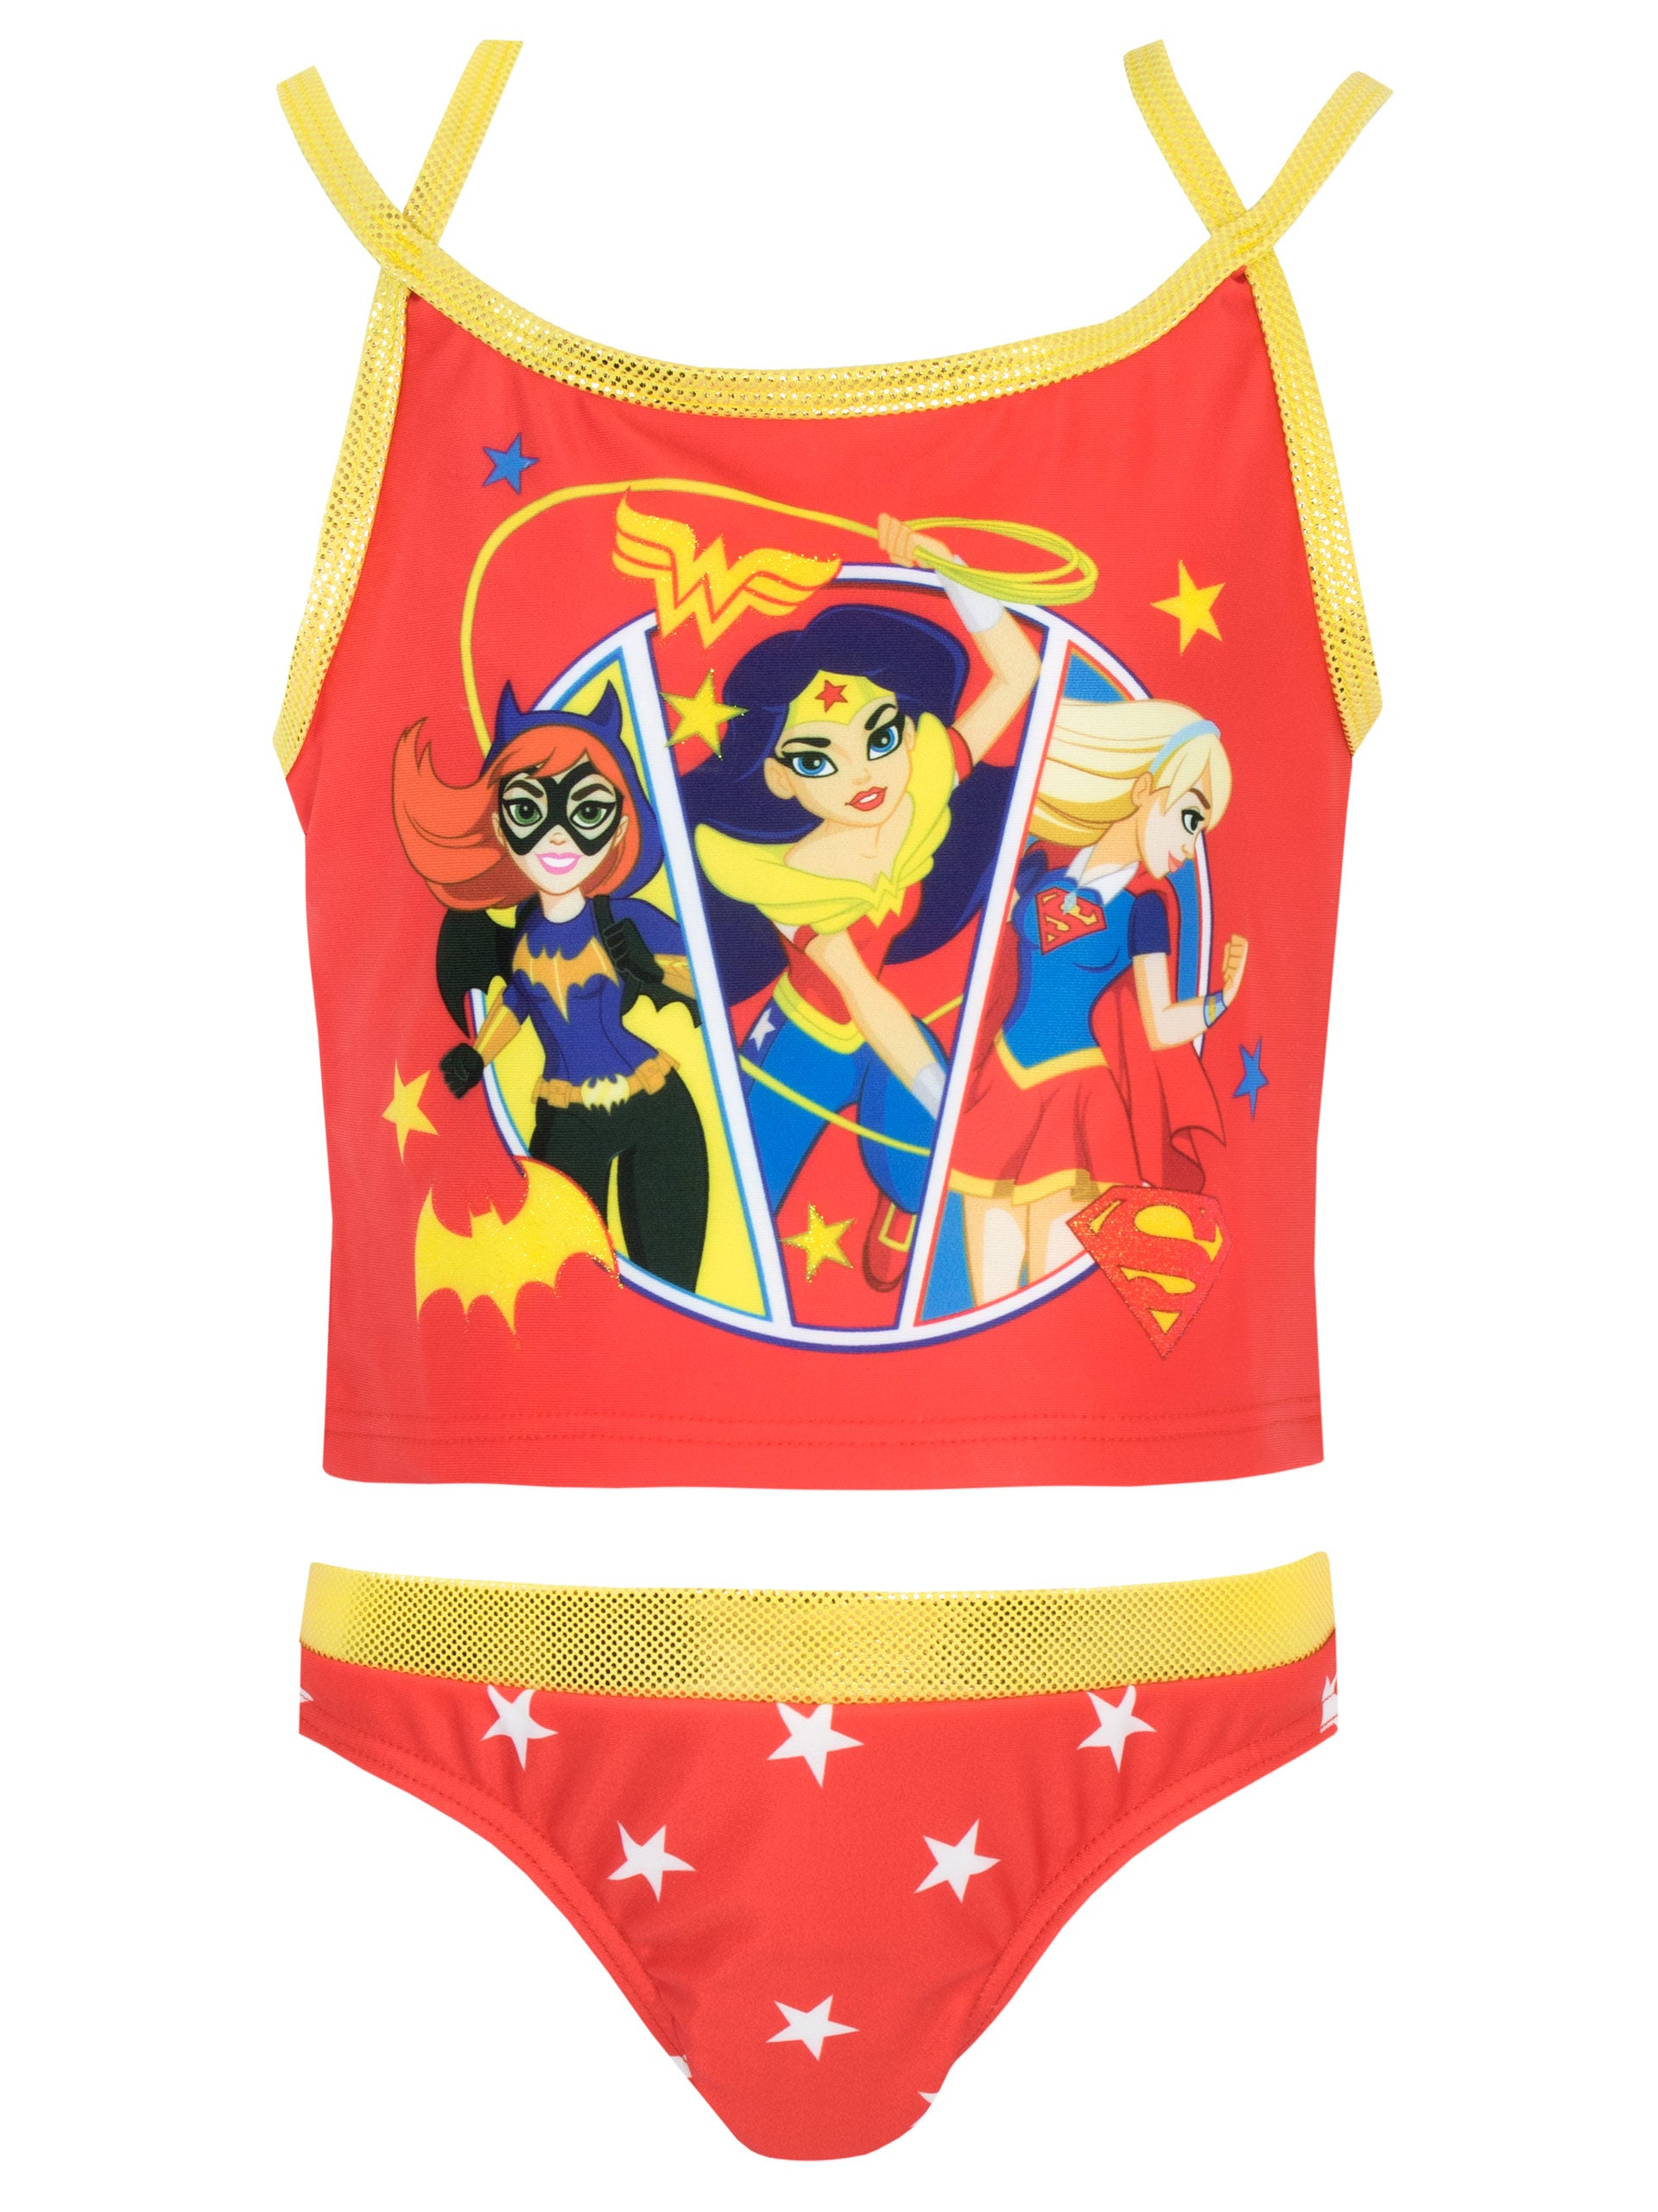 🌟The Star Superheroine 🌟 Wonder Woman bikini sets ready to ship